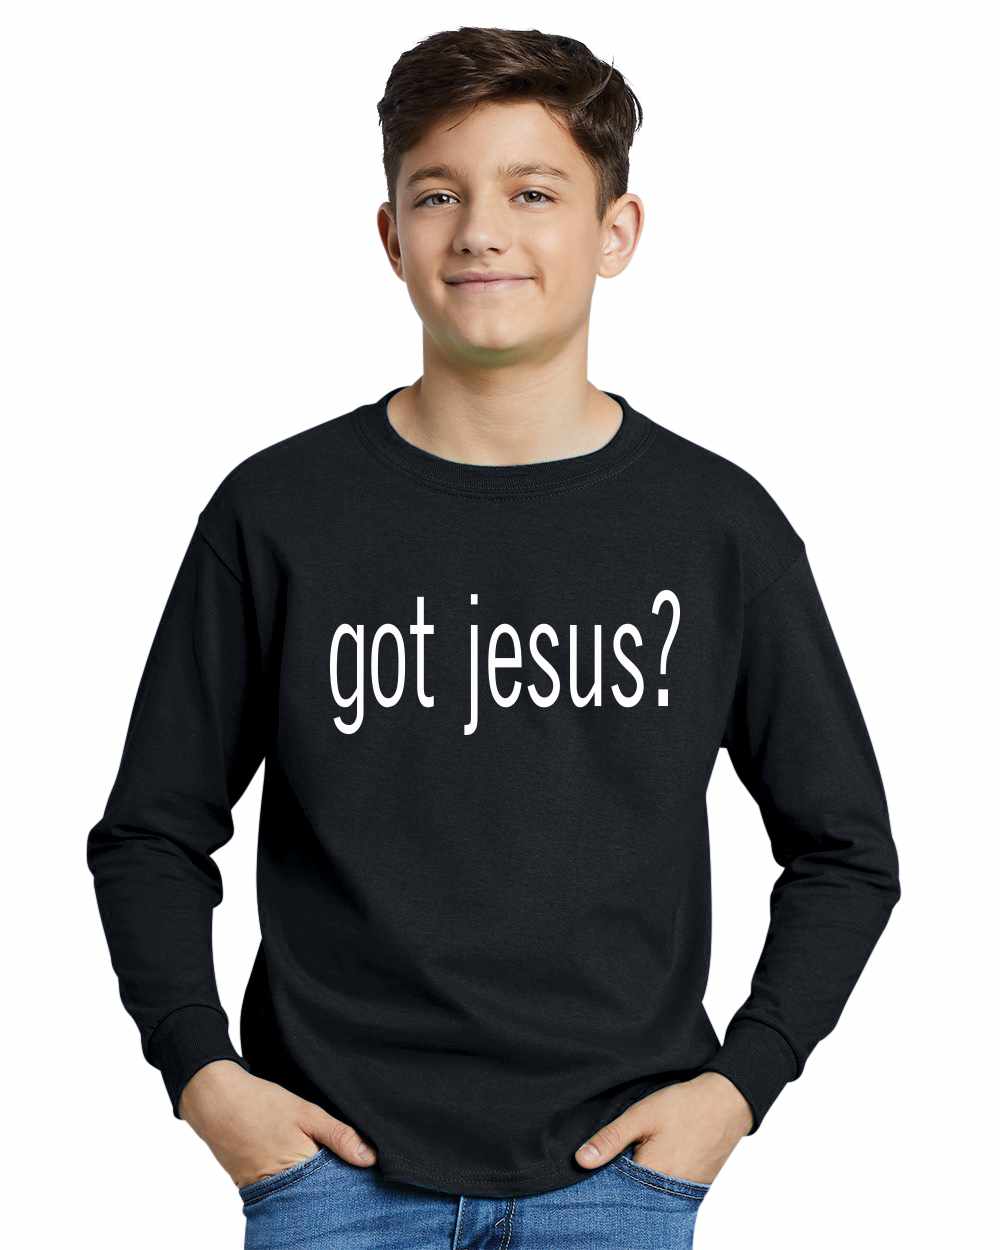 Got Jesus on Youth Long Sleeve Shirt (#79-203)